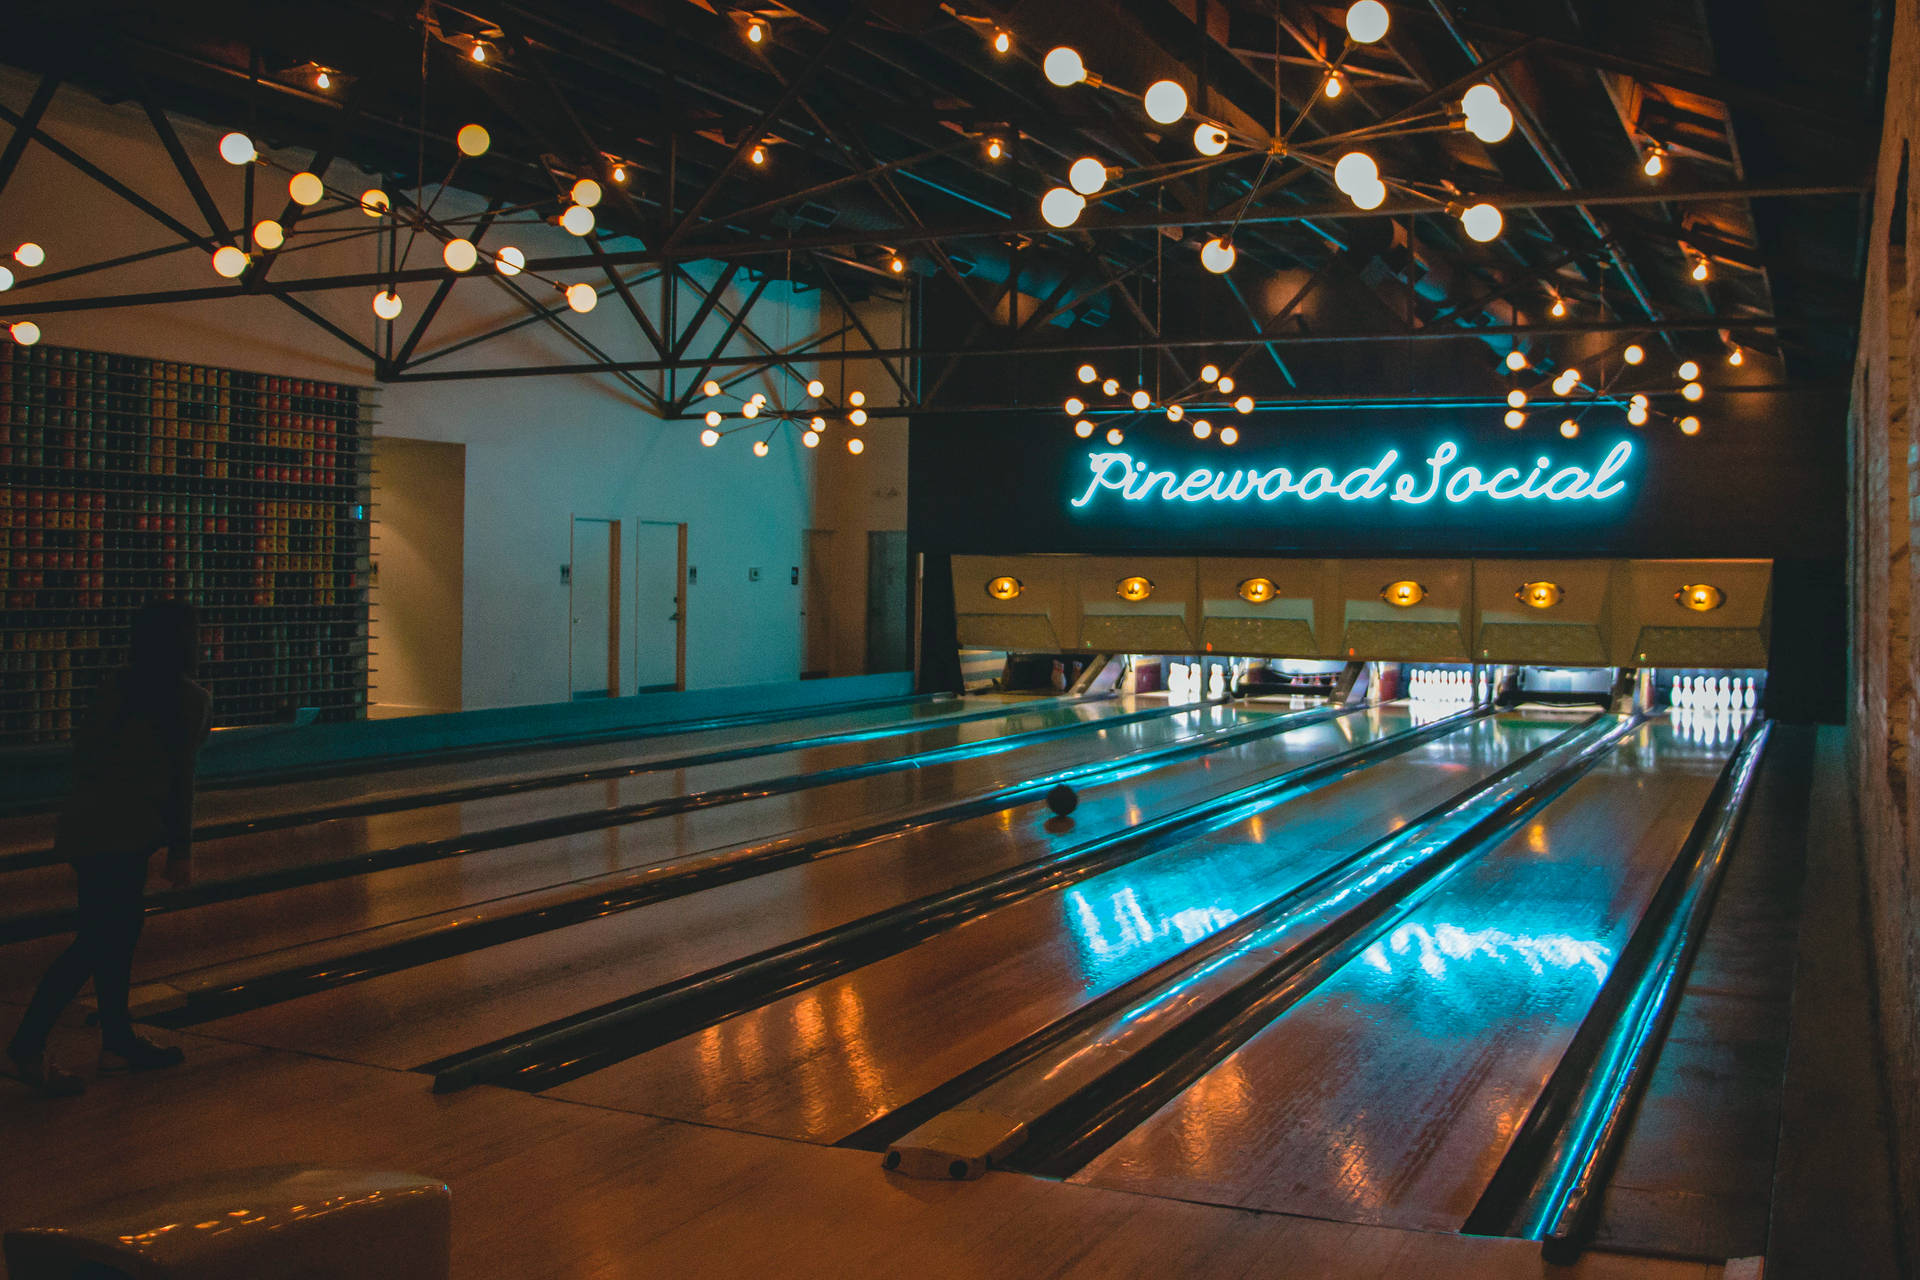 Pinewood Social Bowling Center Wallpaper